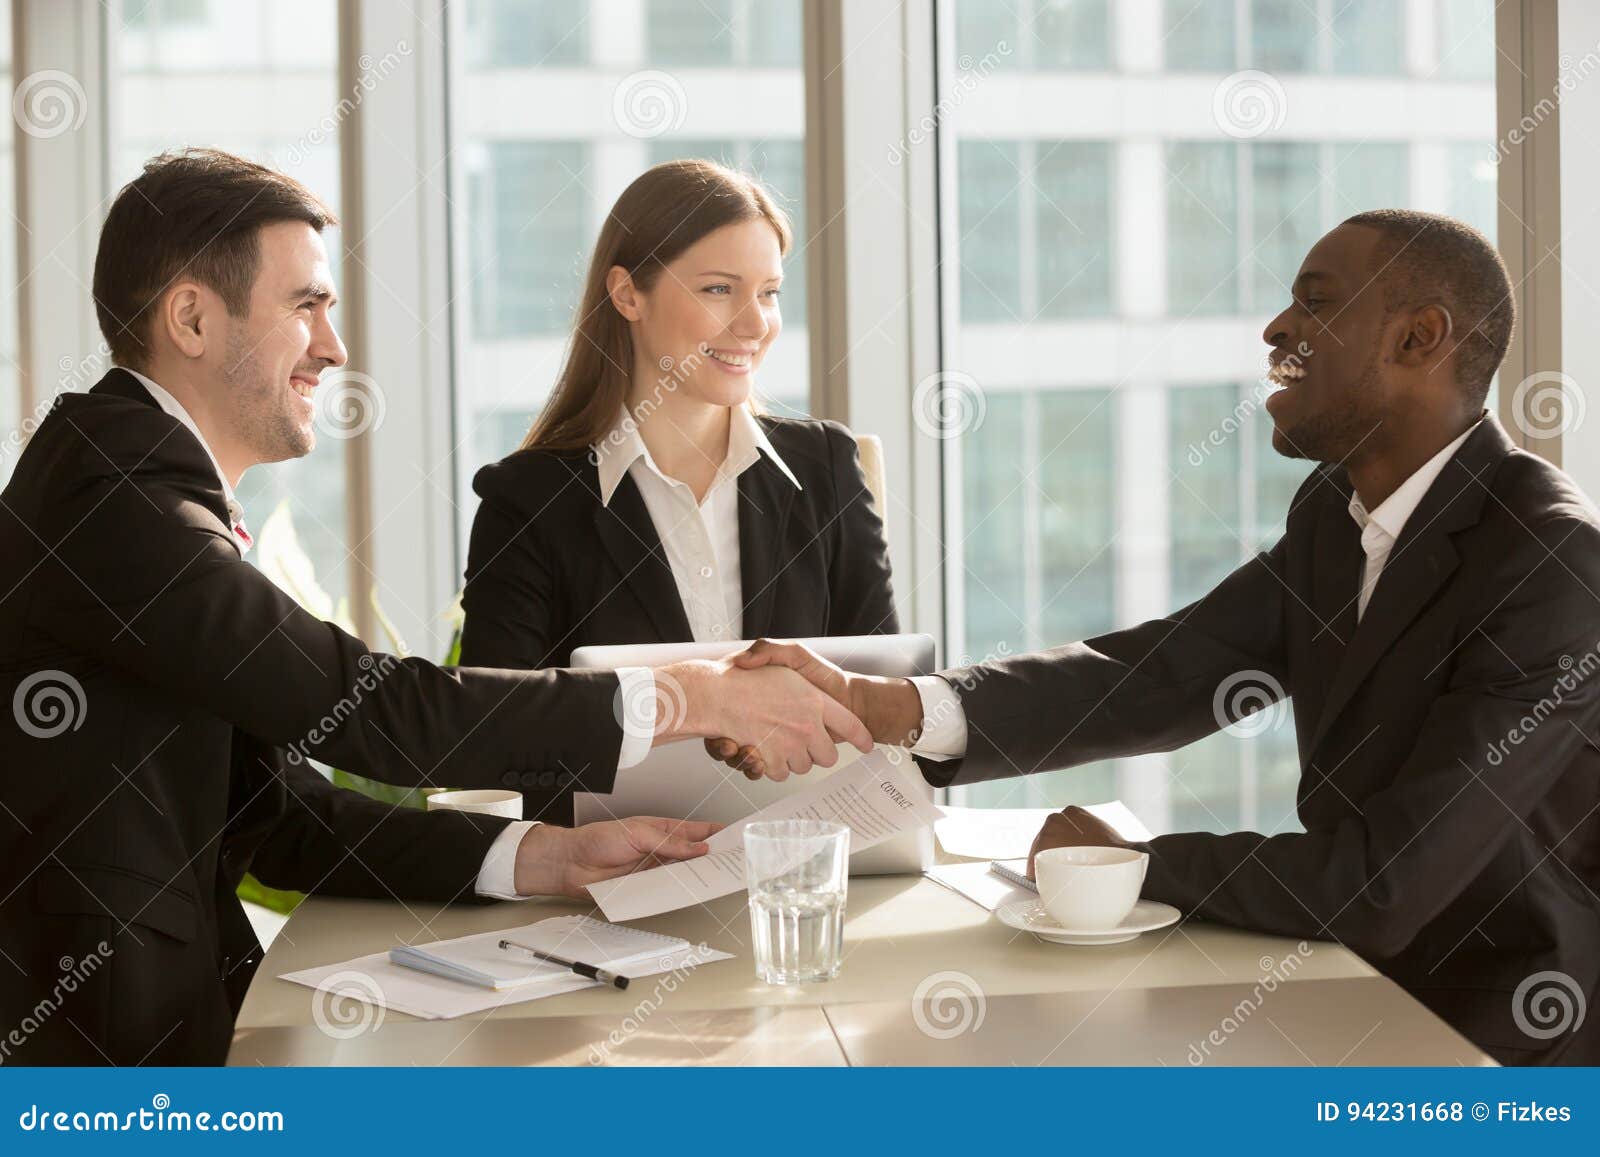 happy-smiling-black-white-businessmen-handshaking-sign-signing-contract-multi-ethnic-meeting-businesswoman-94231668.jpg